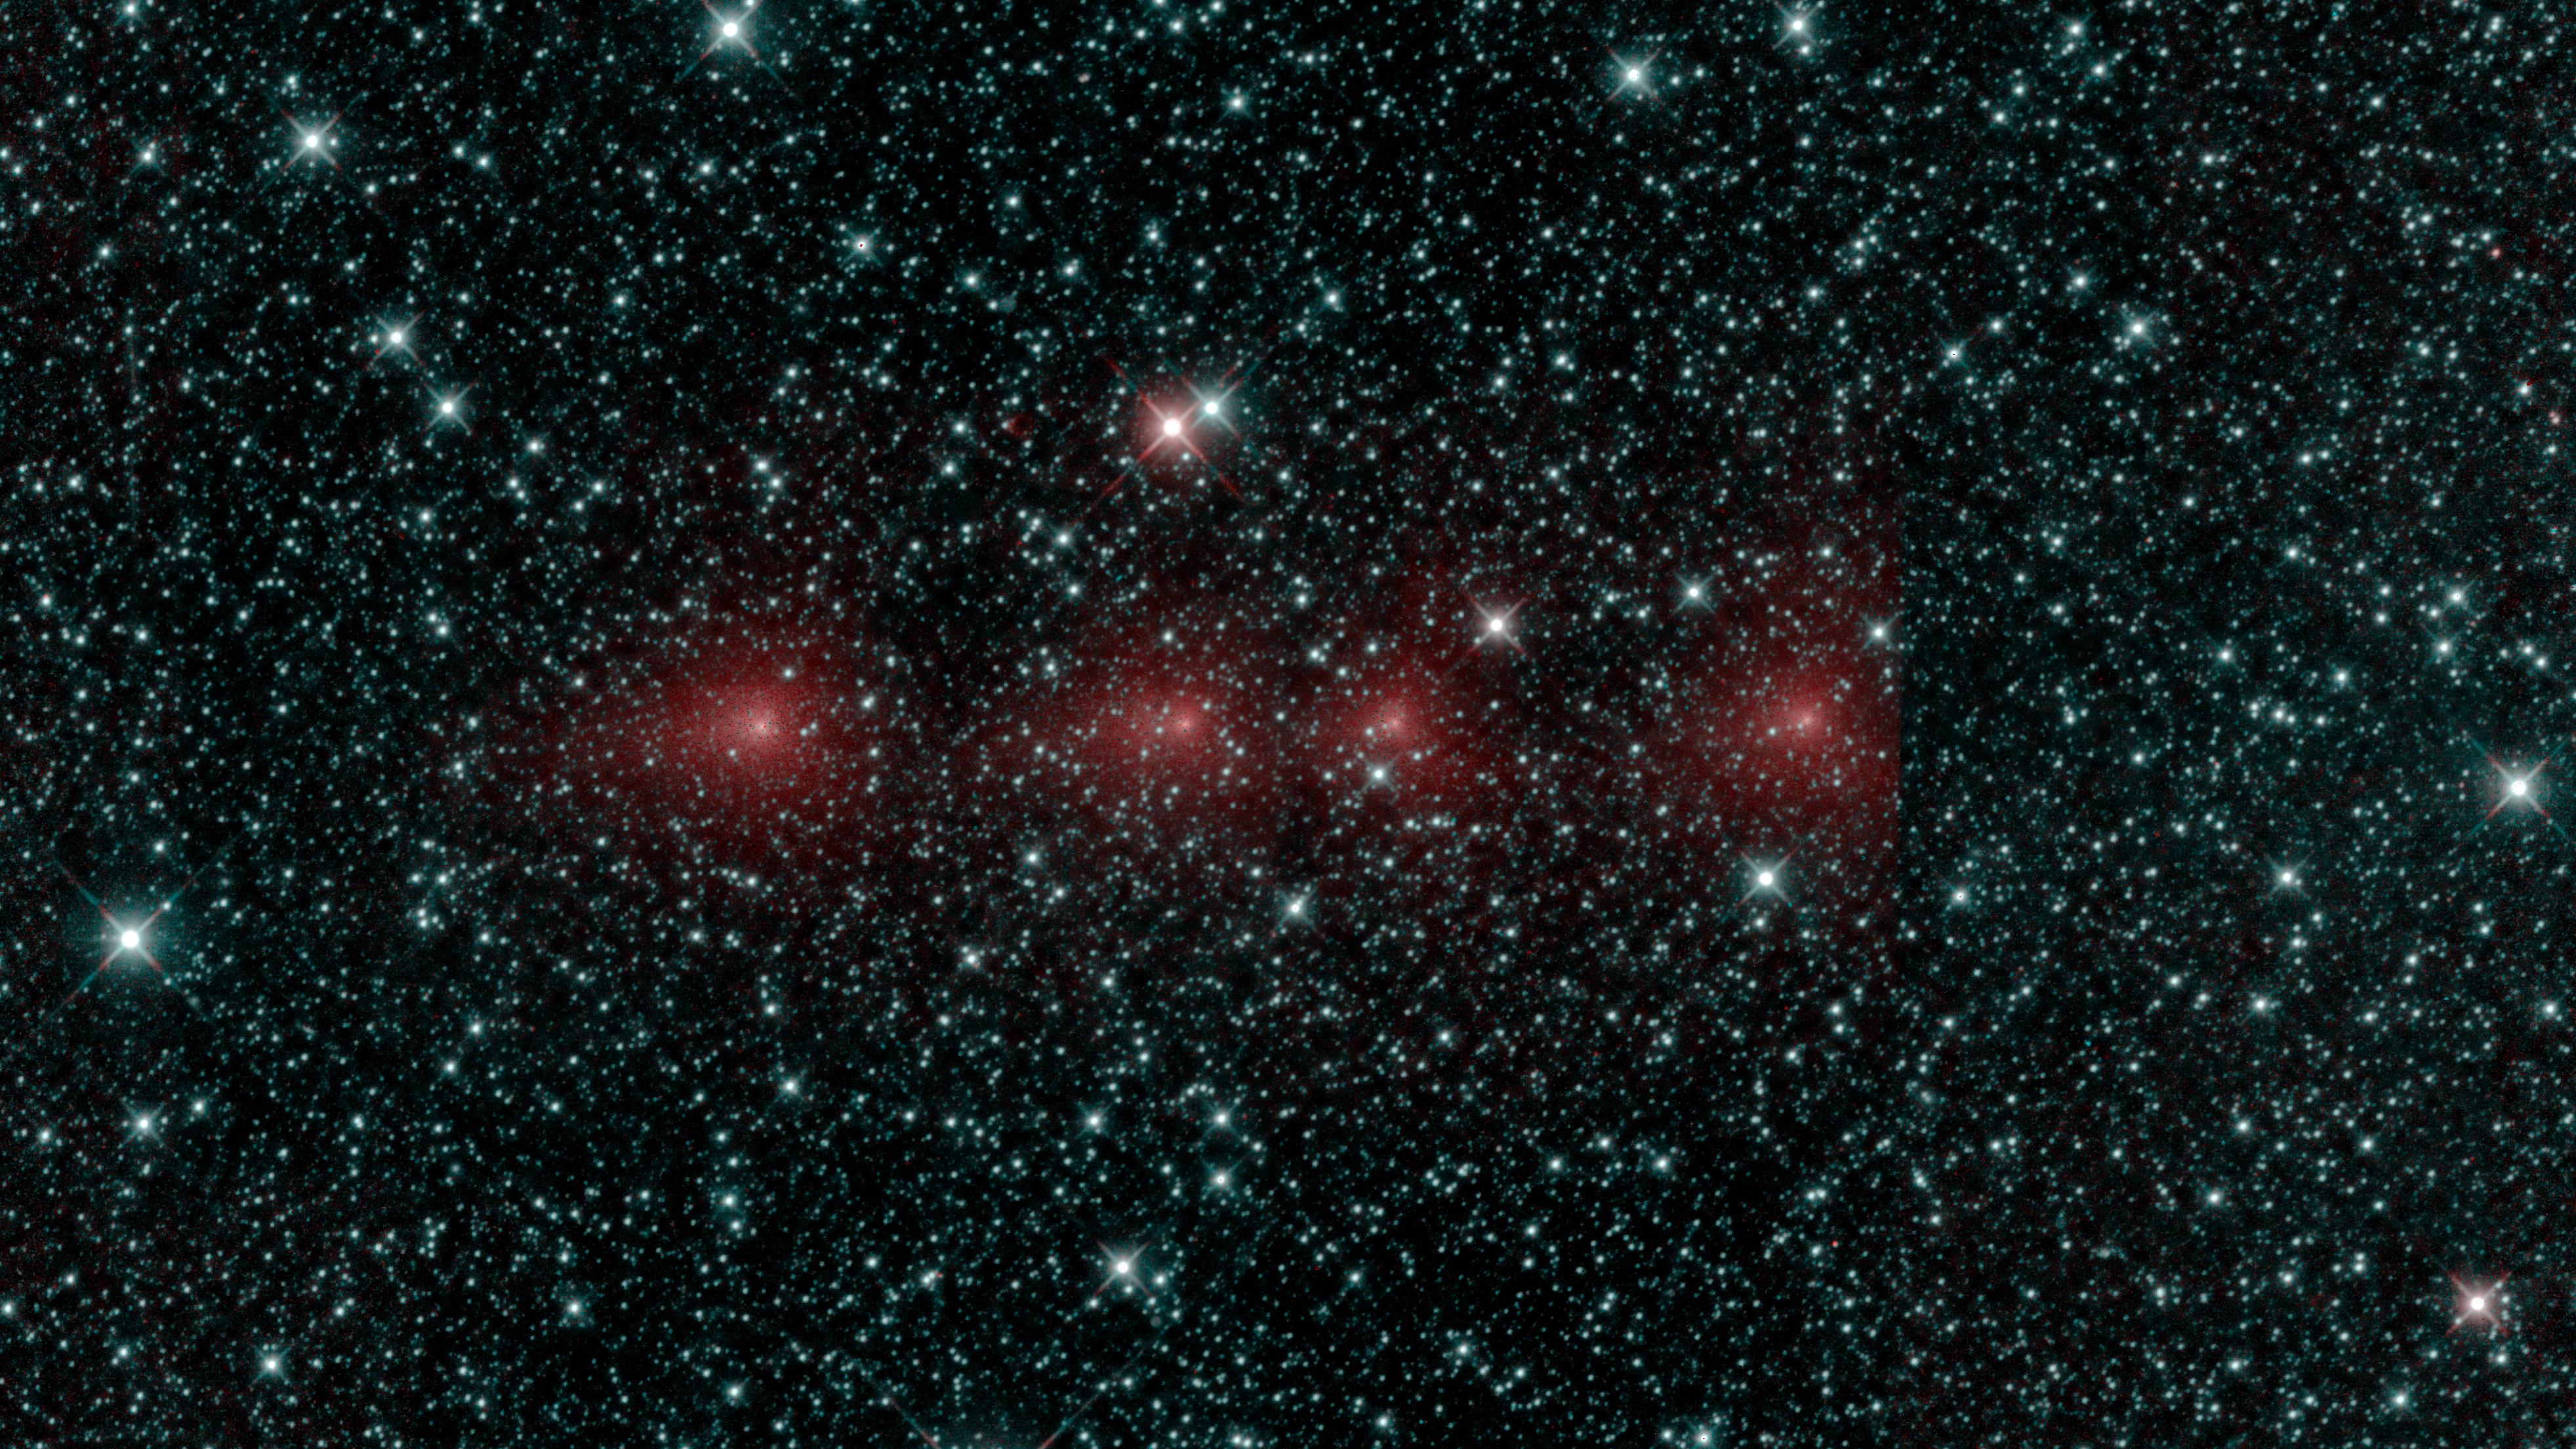 PIA23165: Comet C/2018 Y1 Iwamoto